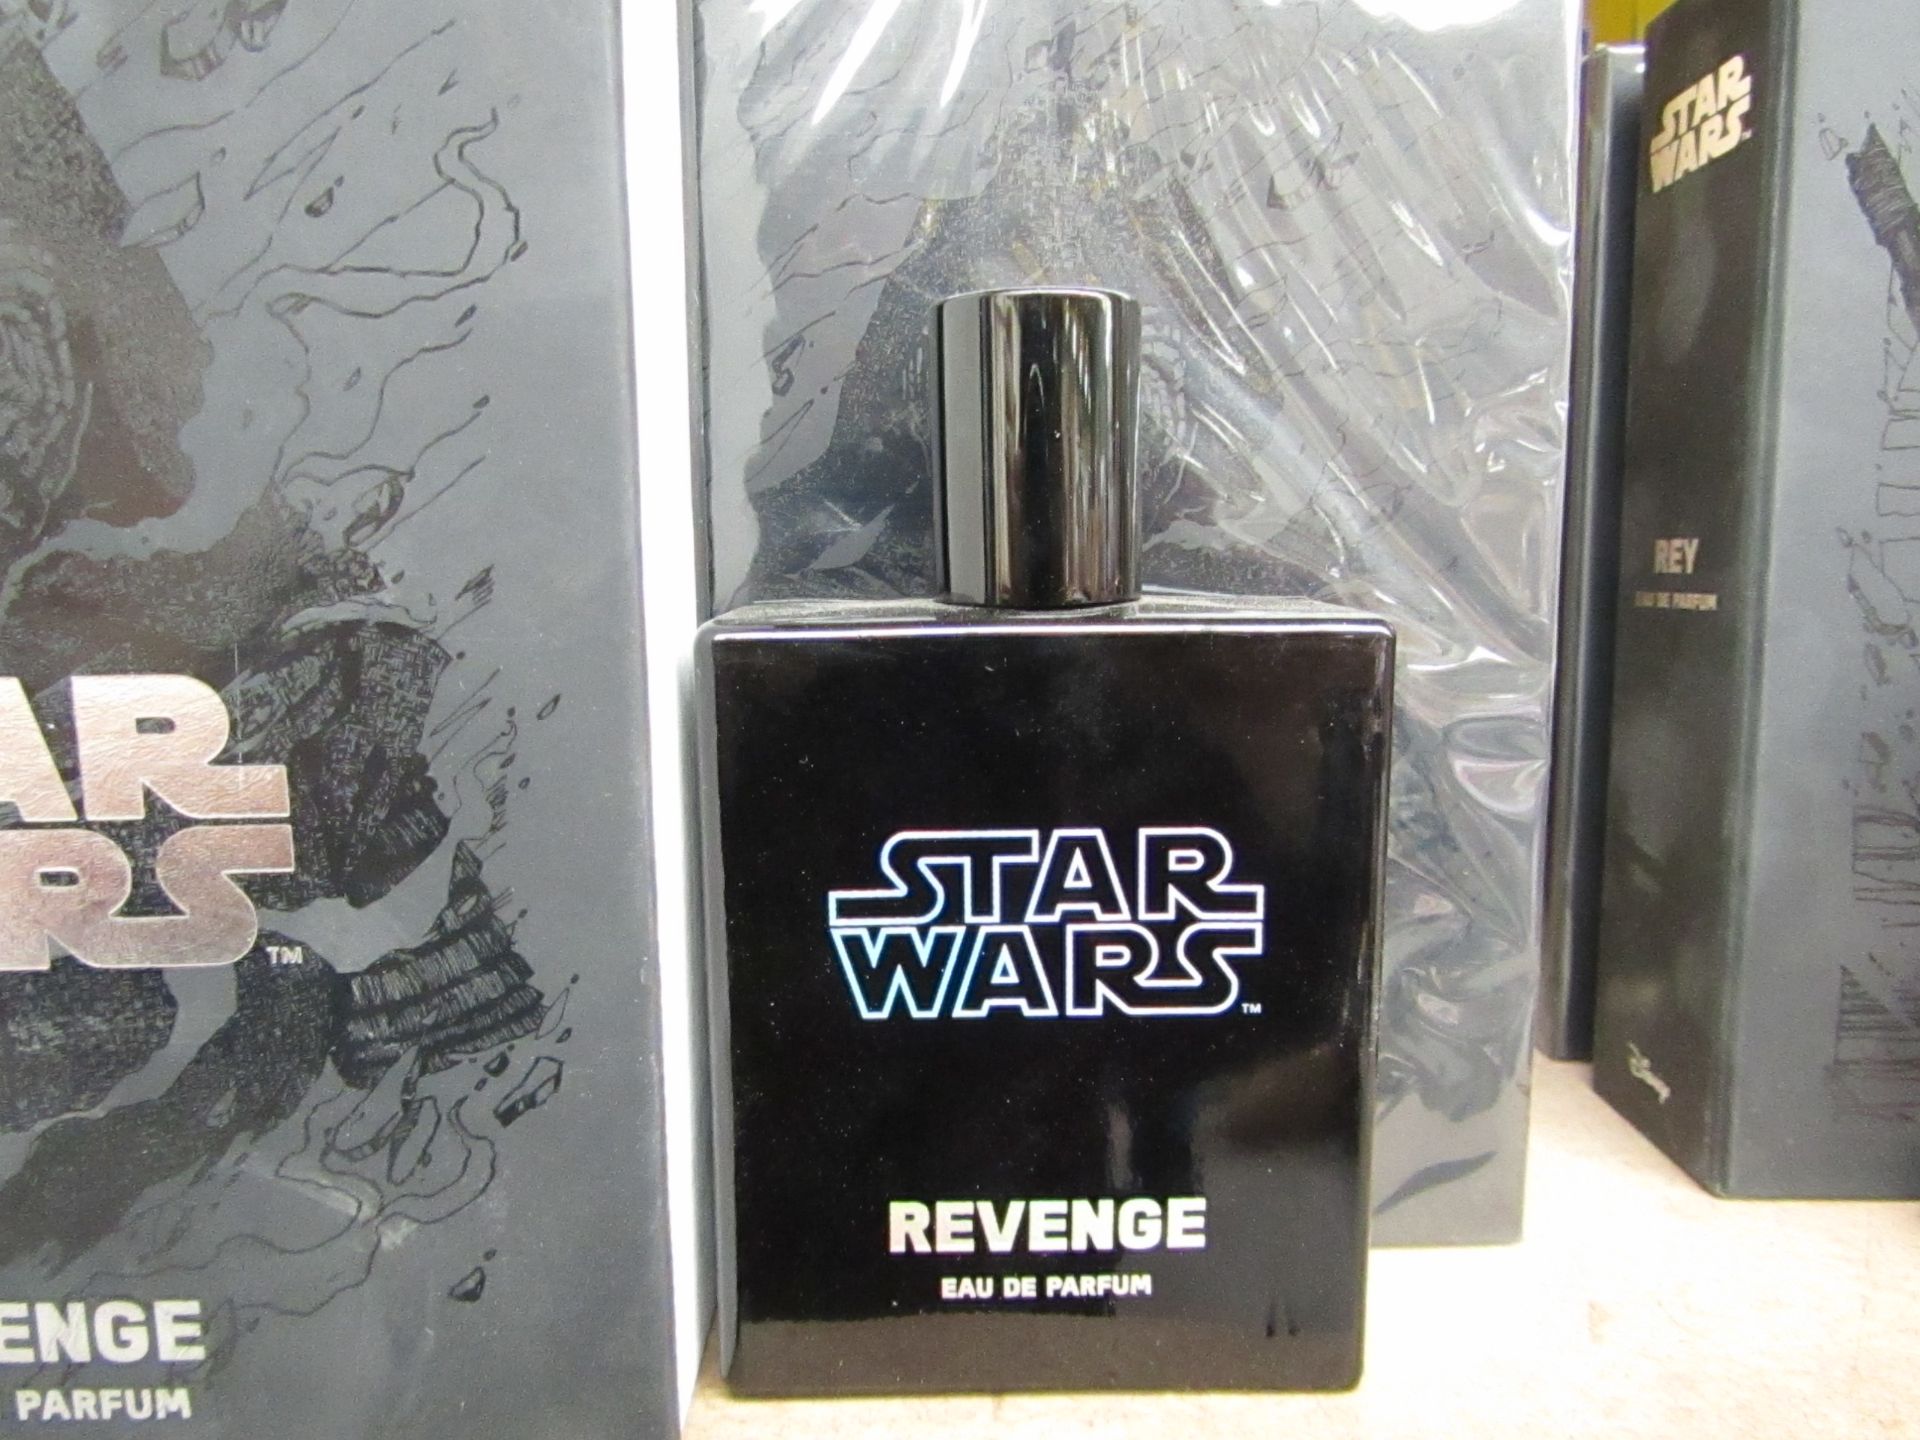 Star Wars Revenge 50ml Eau De Parfum, new and packaged.